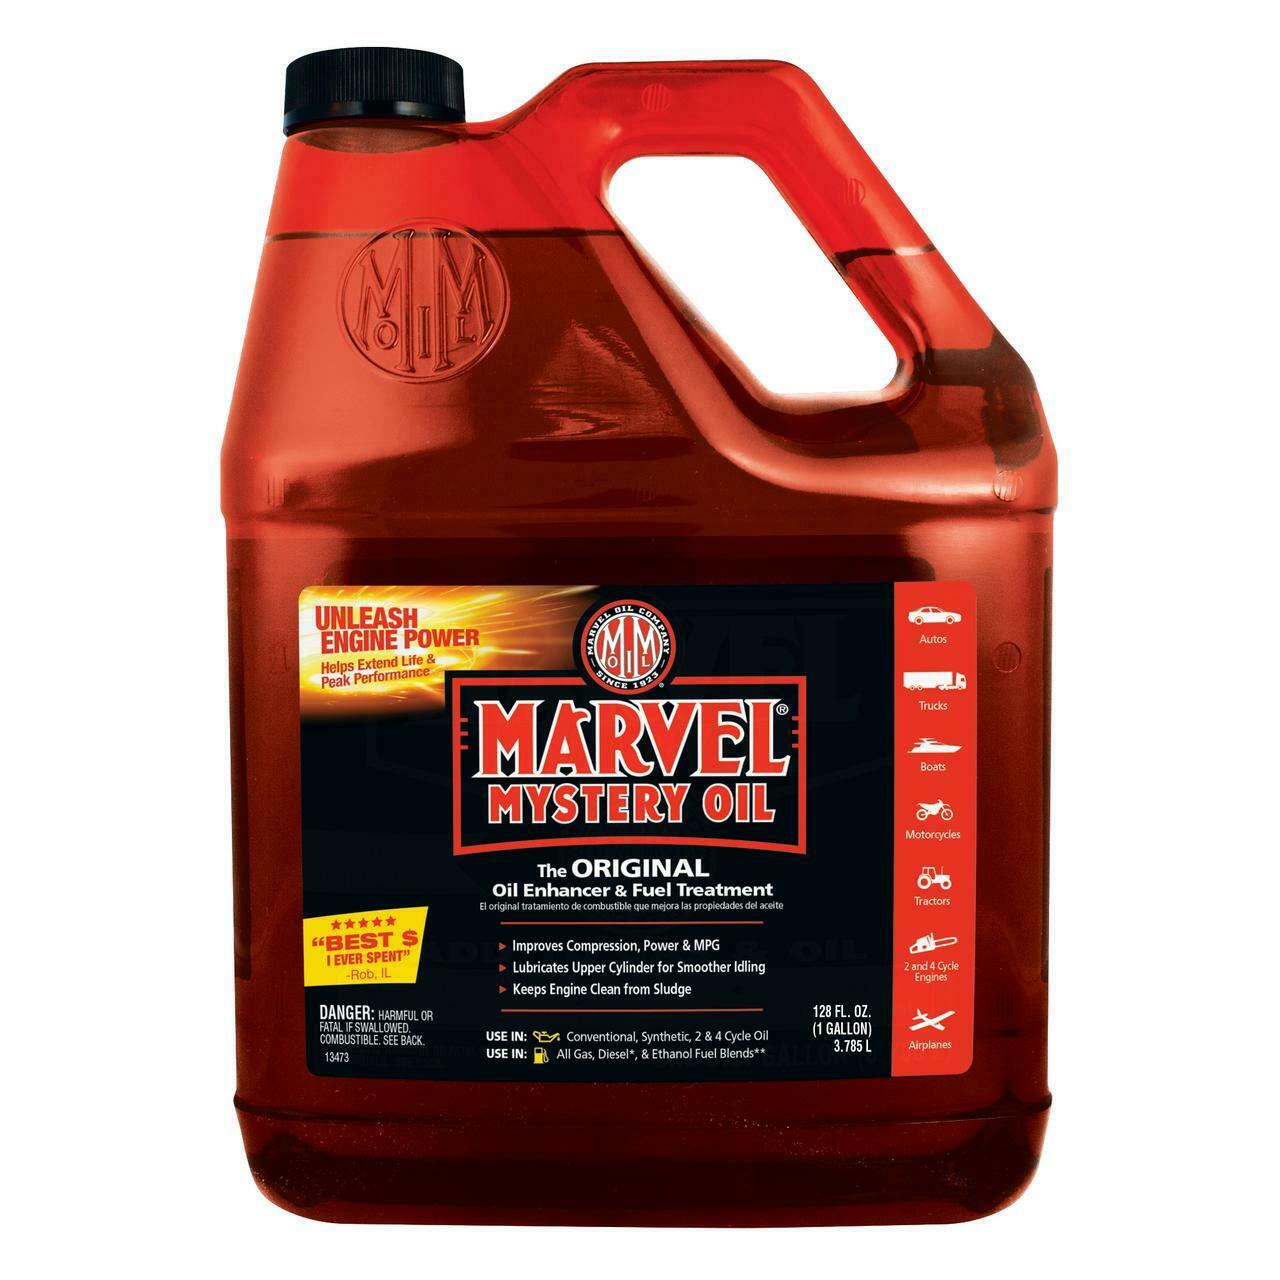 Marvel Mystery Oil, Oil Enhancer And Fuel Treatment, 1 Gallon, Prevents Rust